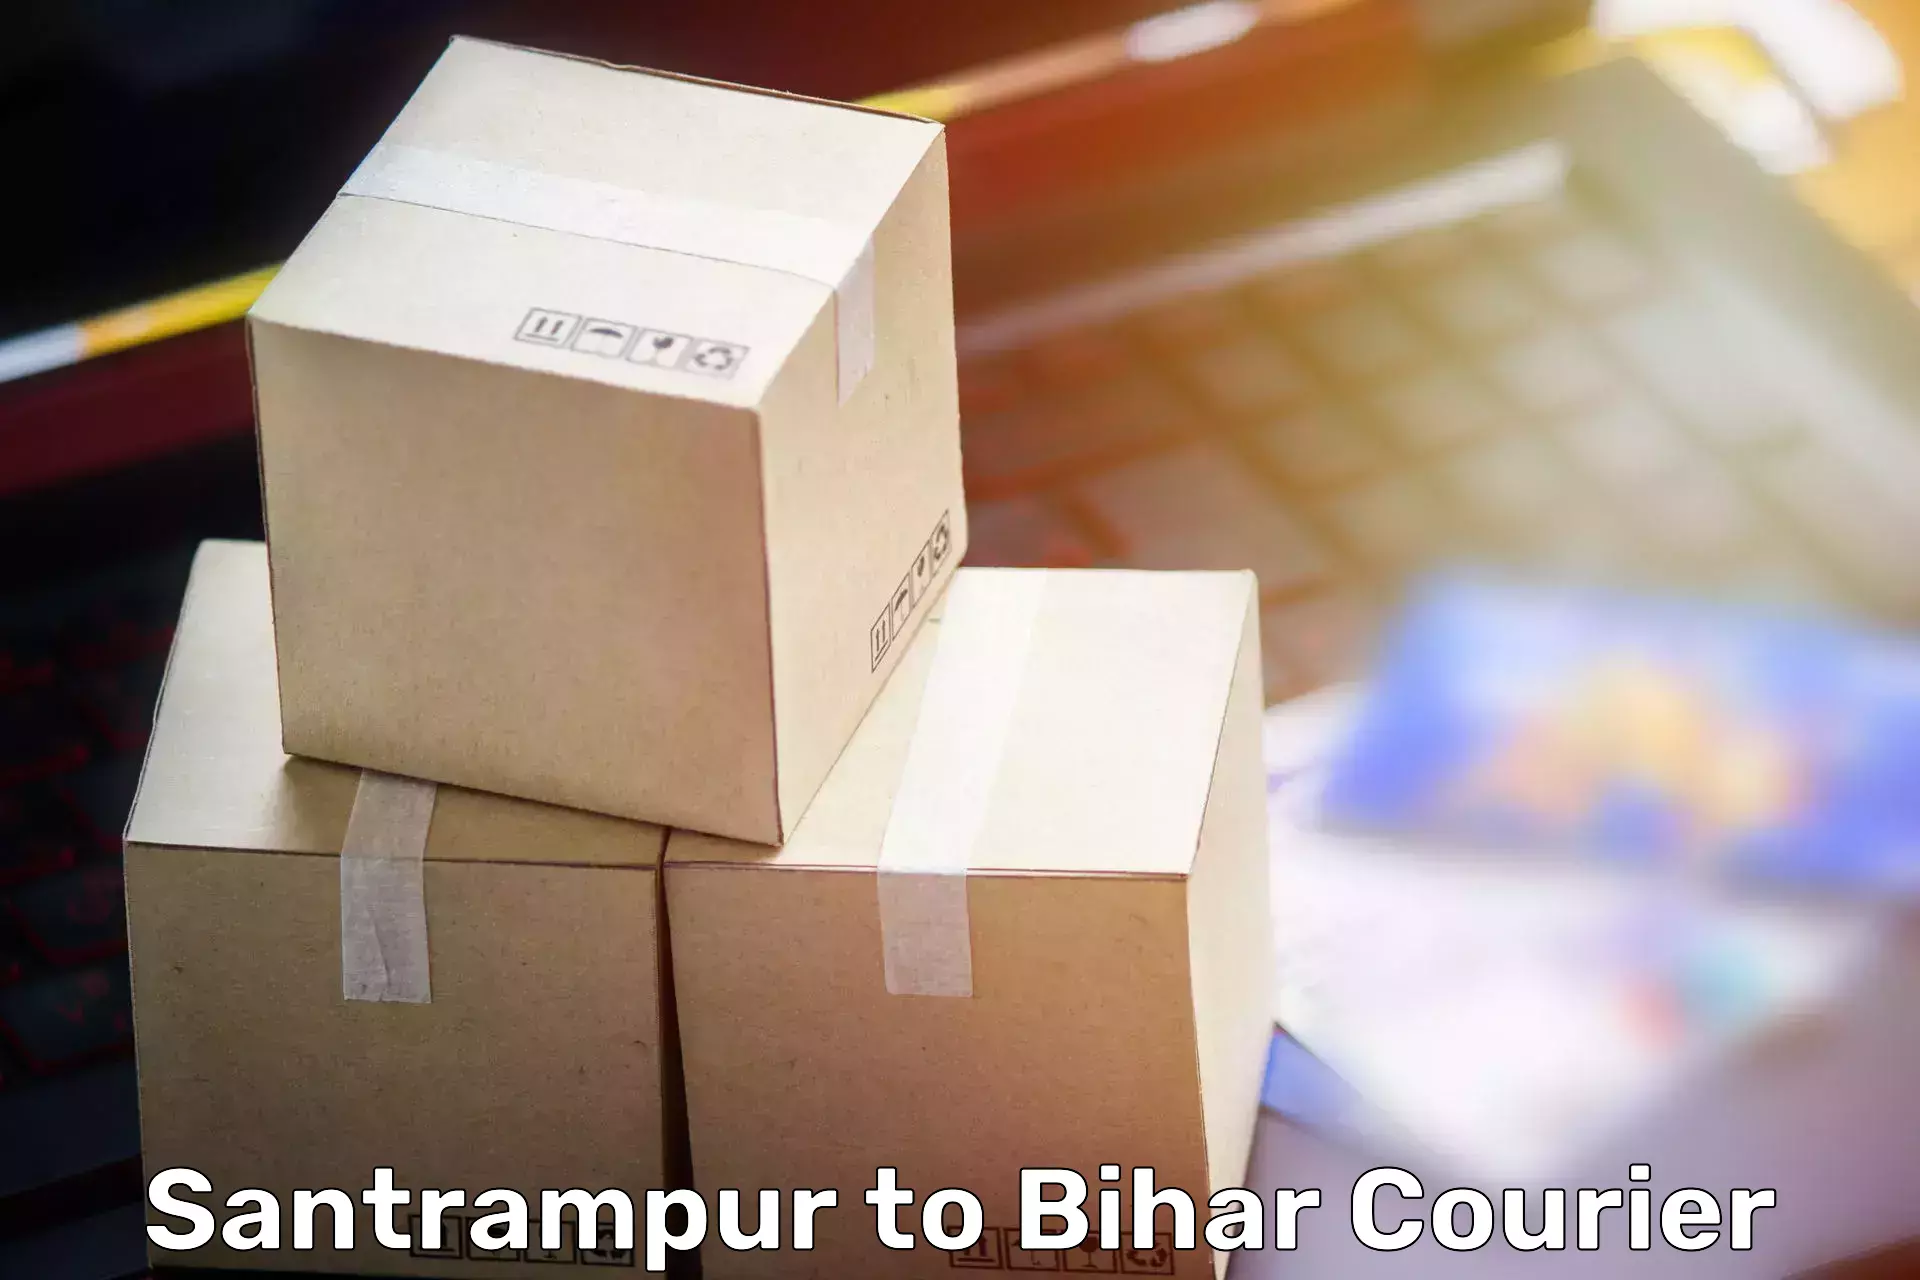 Furniture delivery service Santrampur to Bihar